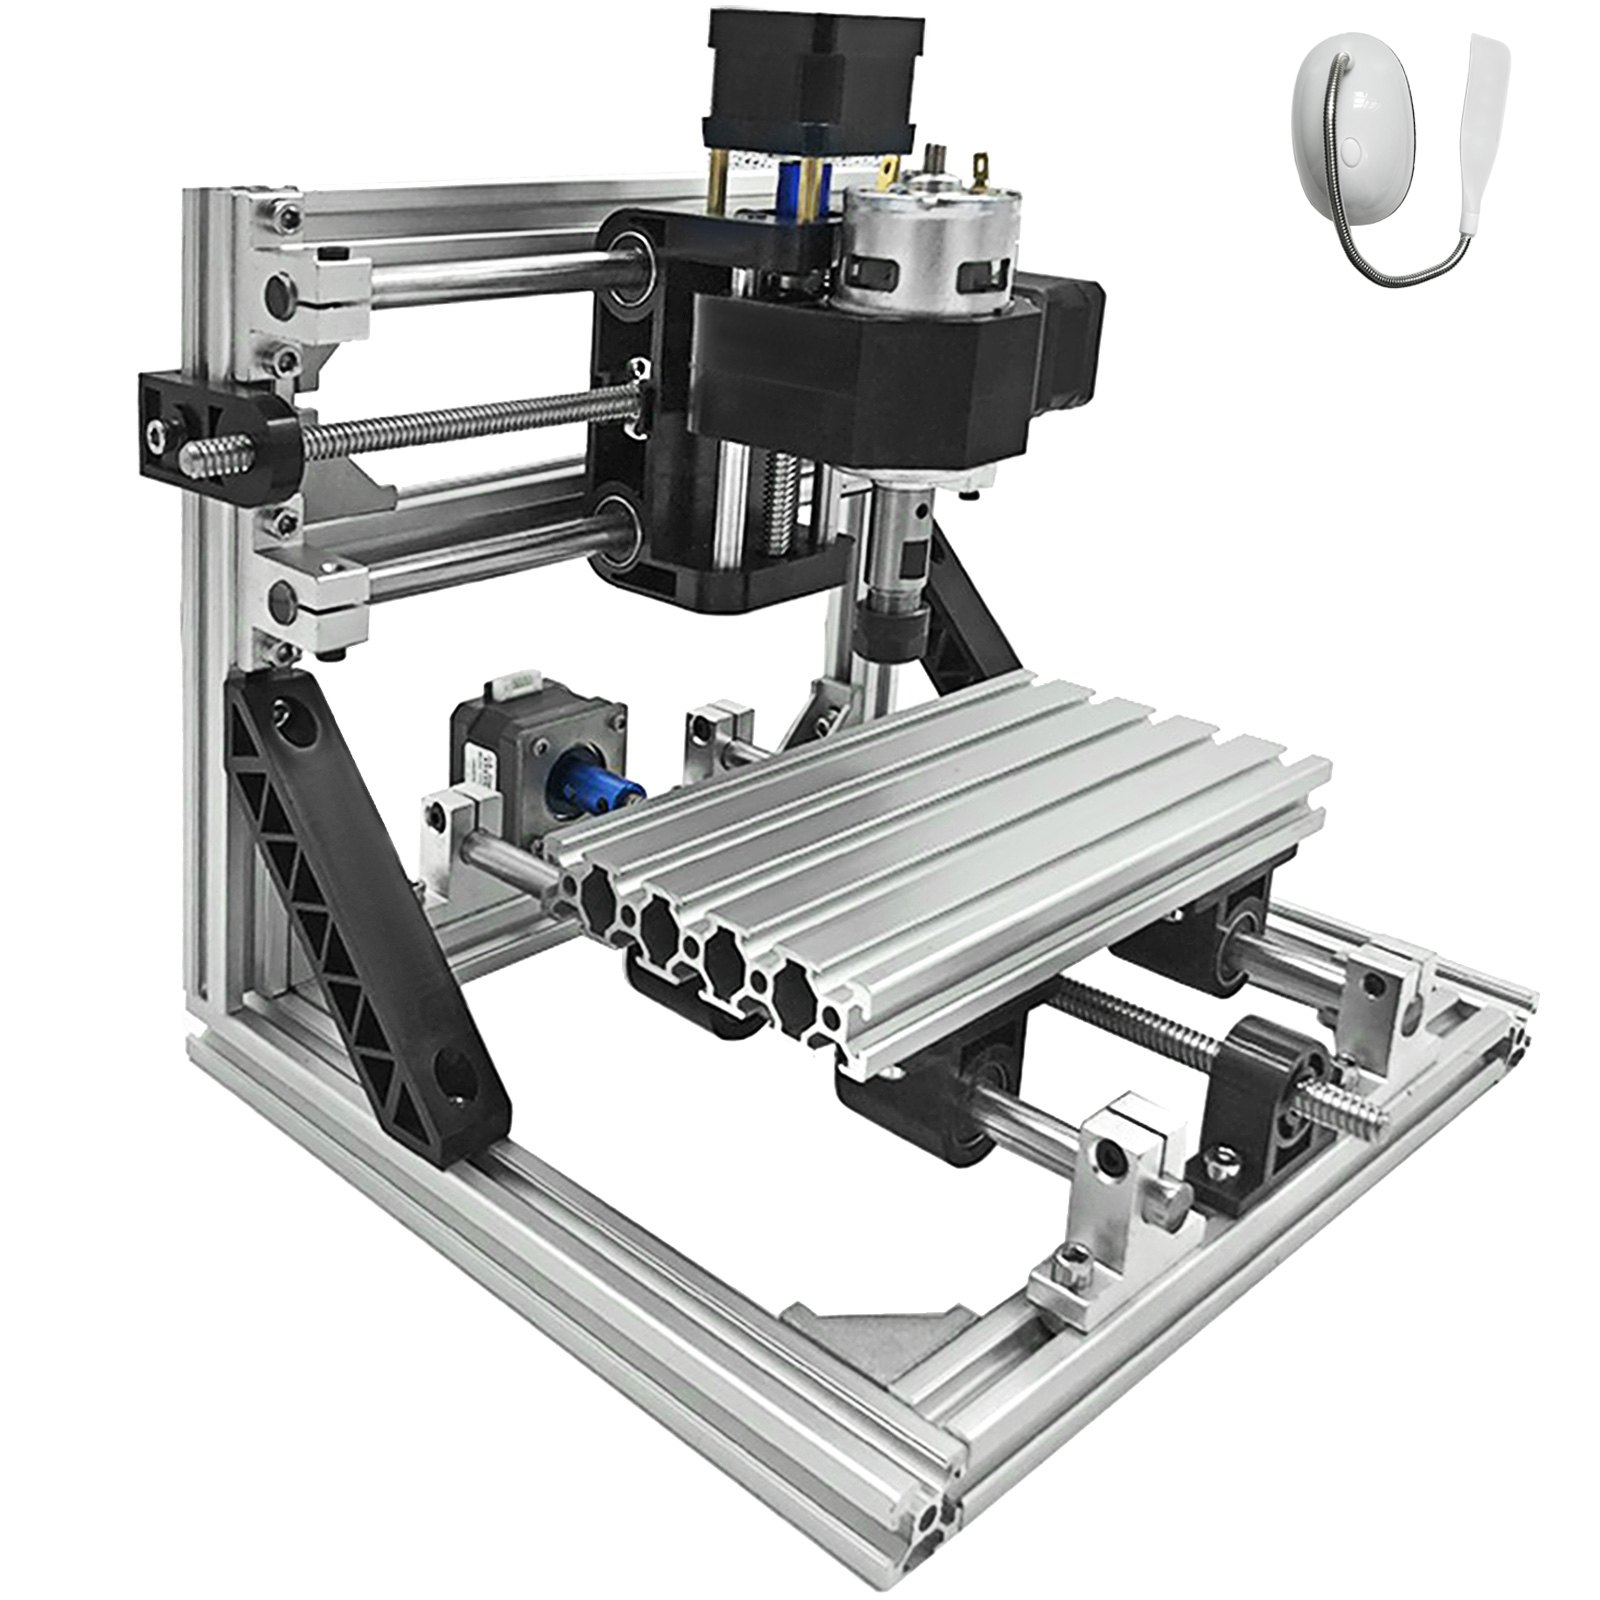 CNC 1610 DIY 3 Axis Engraver Kit GRBL Control Milling Machine For Wood PVB PCB от Vevor Many GEOs